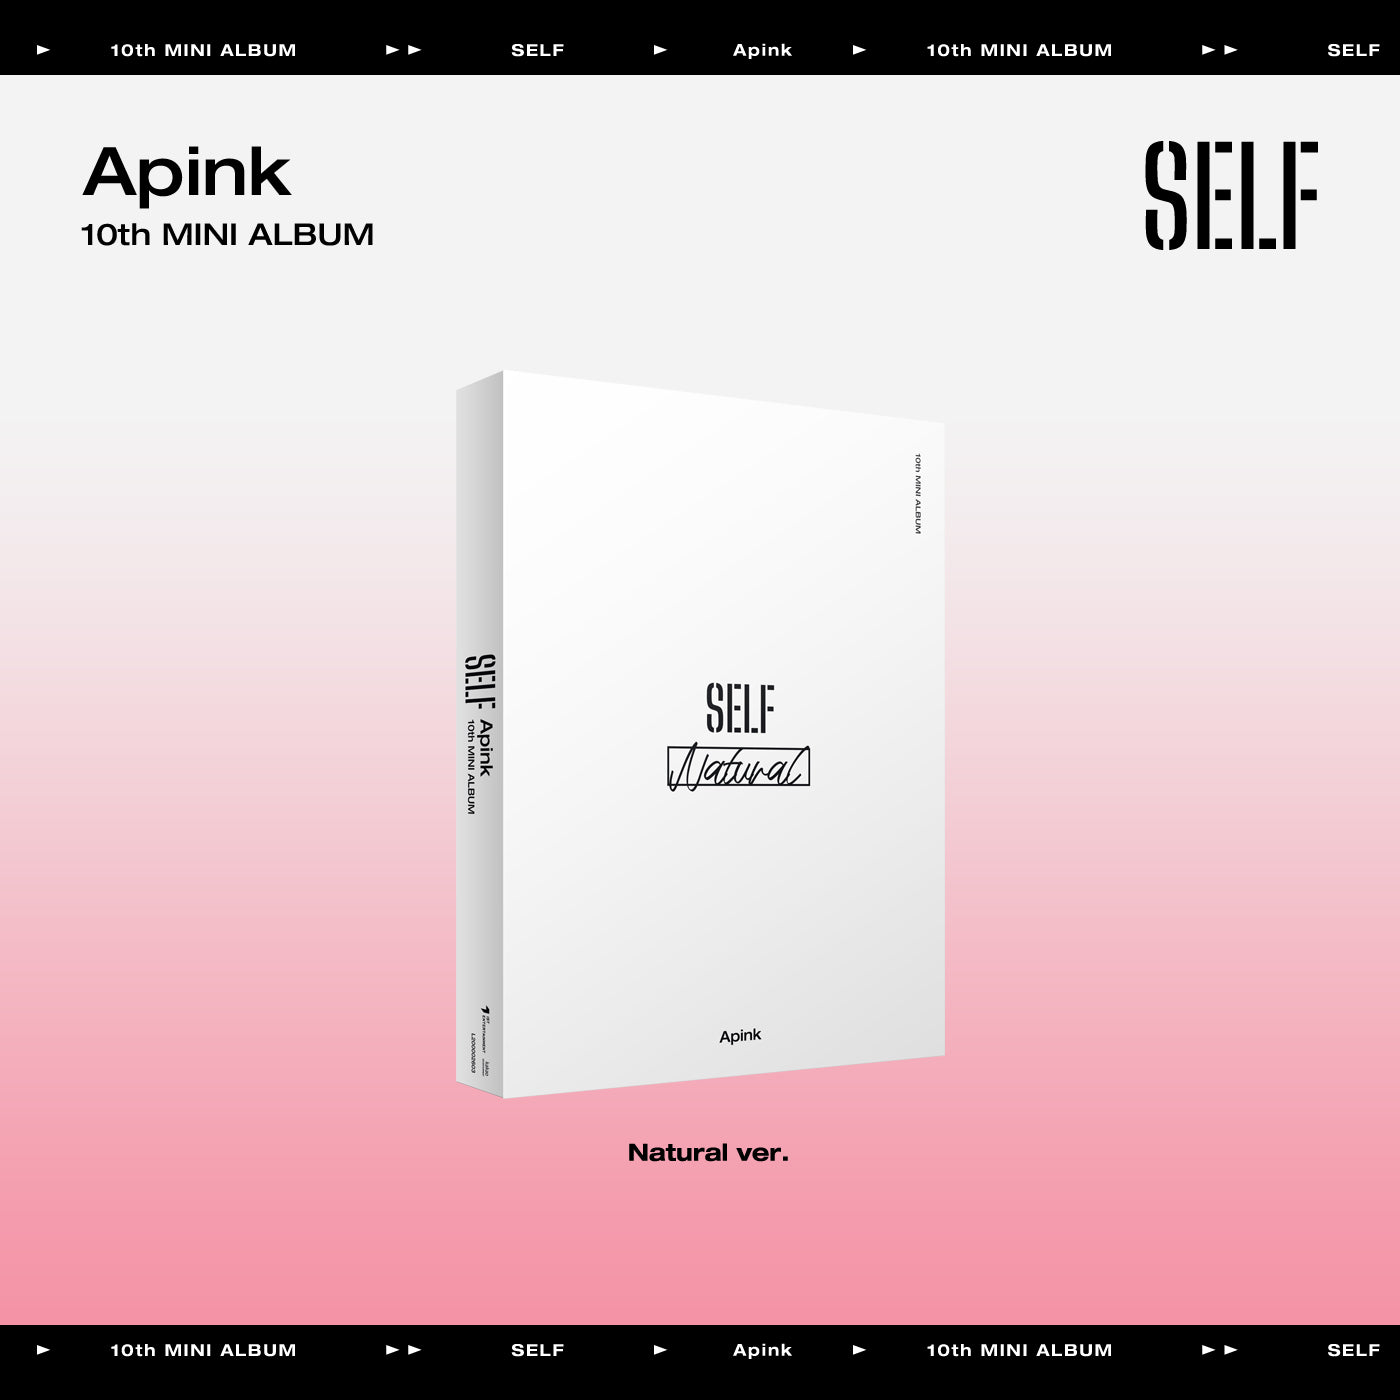 APINK 10TH MINI ALBUM 'SELF' NATURAL VERSION COVER